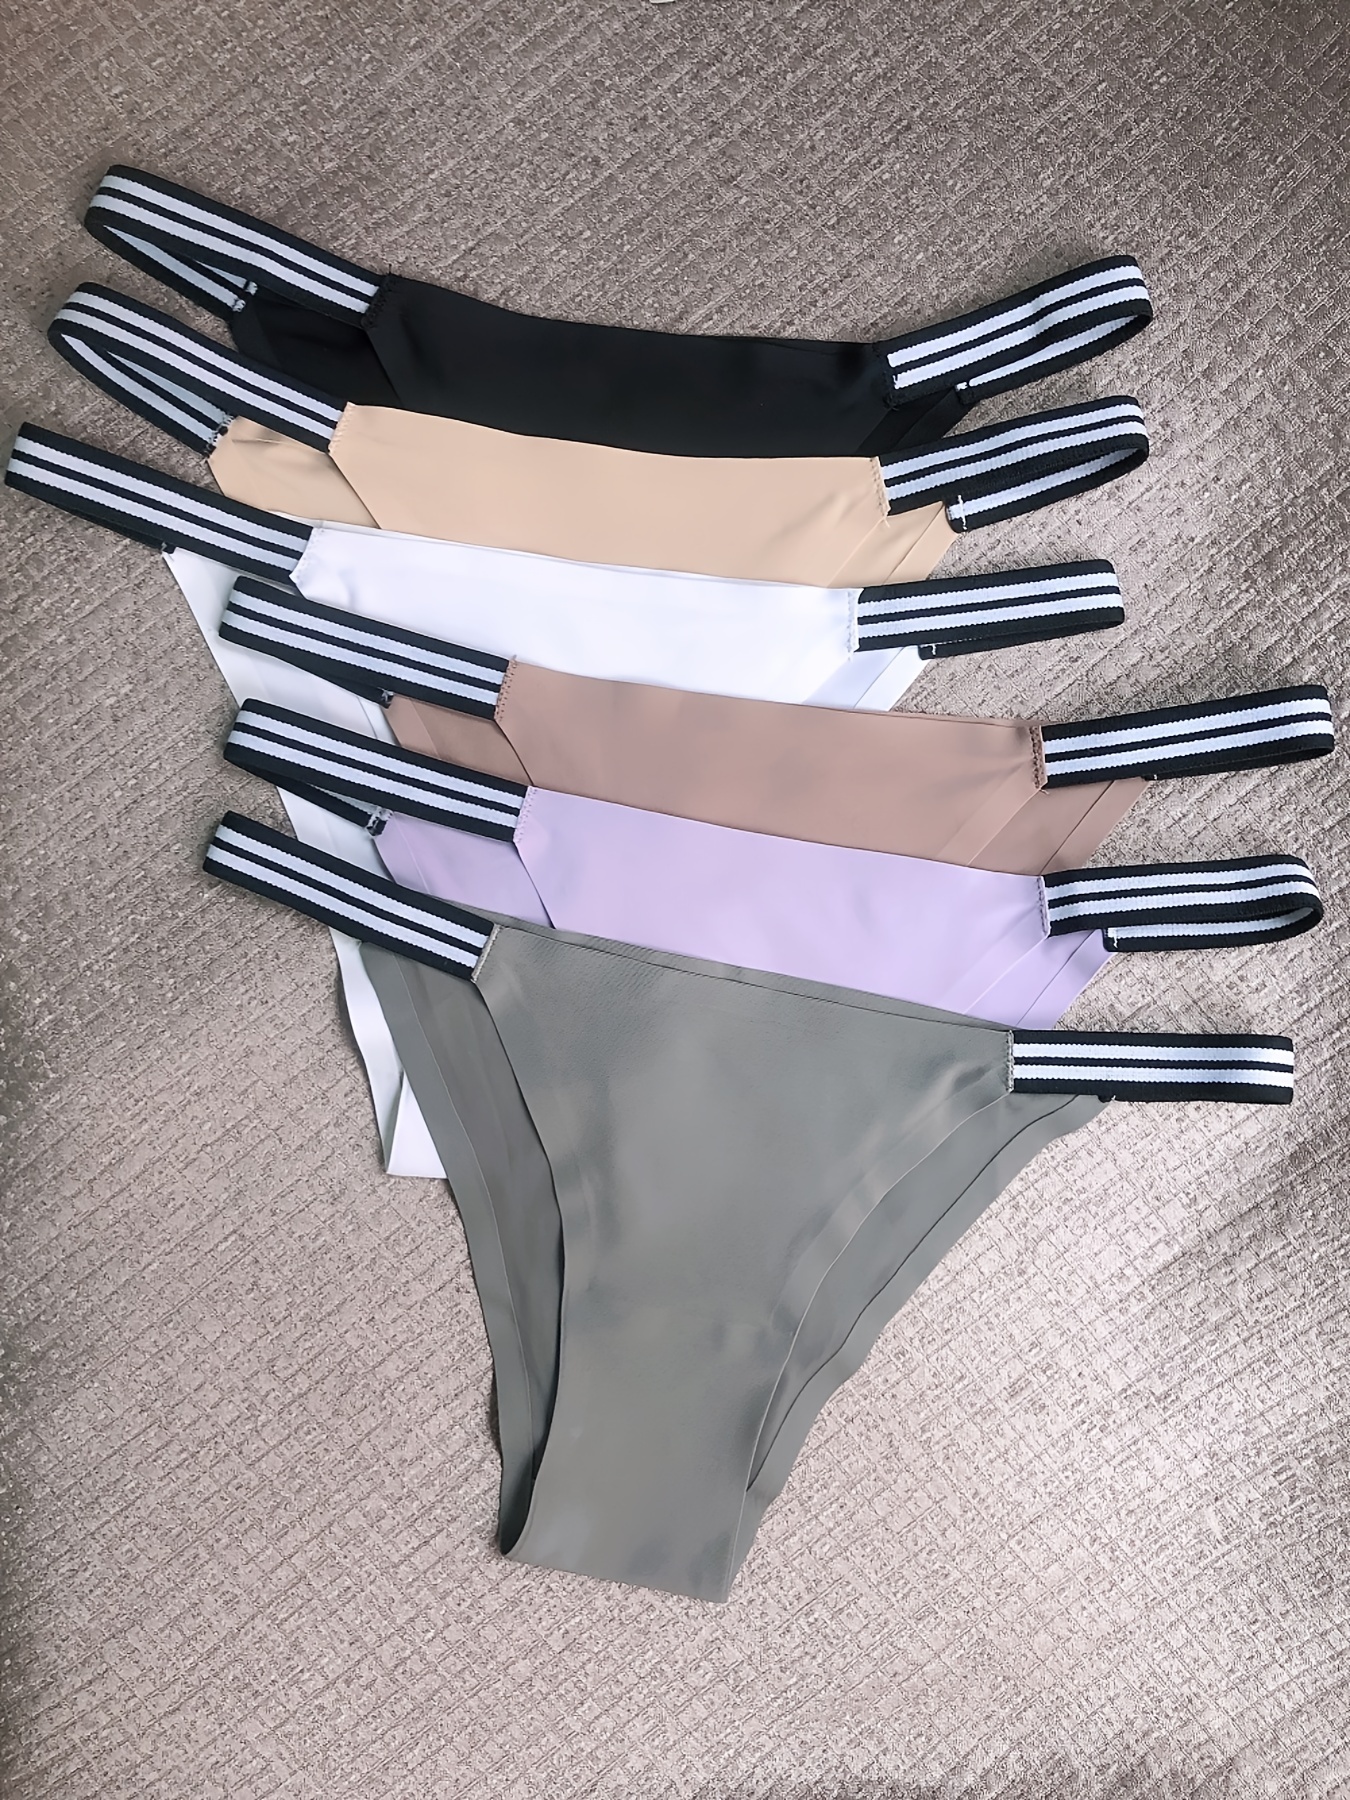 4 Pcs Simple Panties, Plain Skin Tone Seamless Low-Waist Stretchy  Breathable Intimates Panties, Women's Lingerie & Underwear